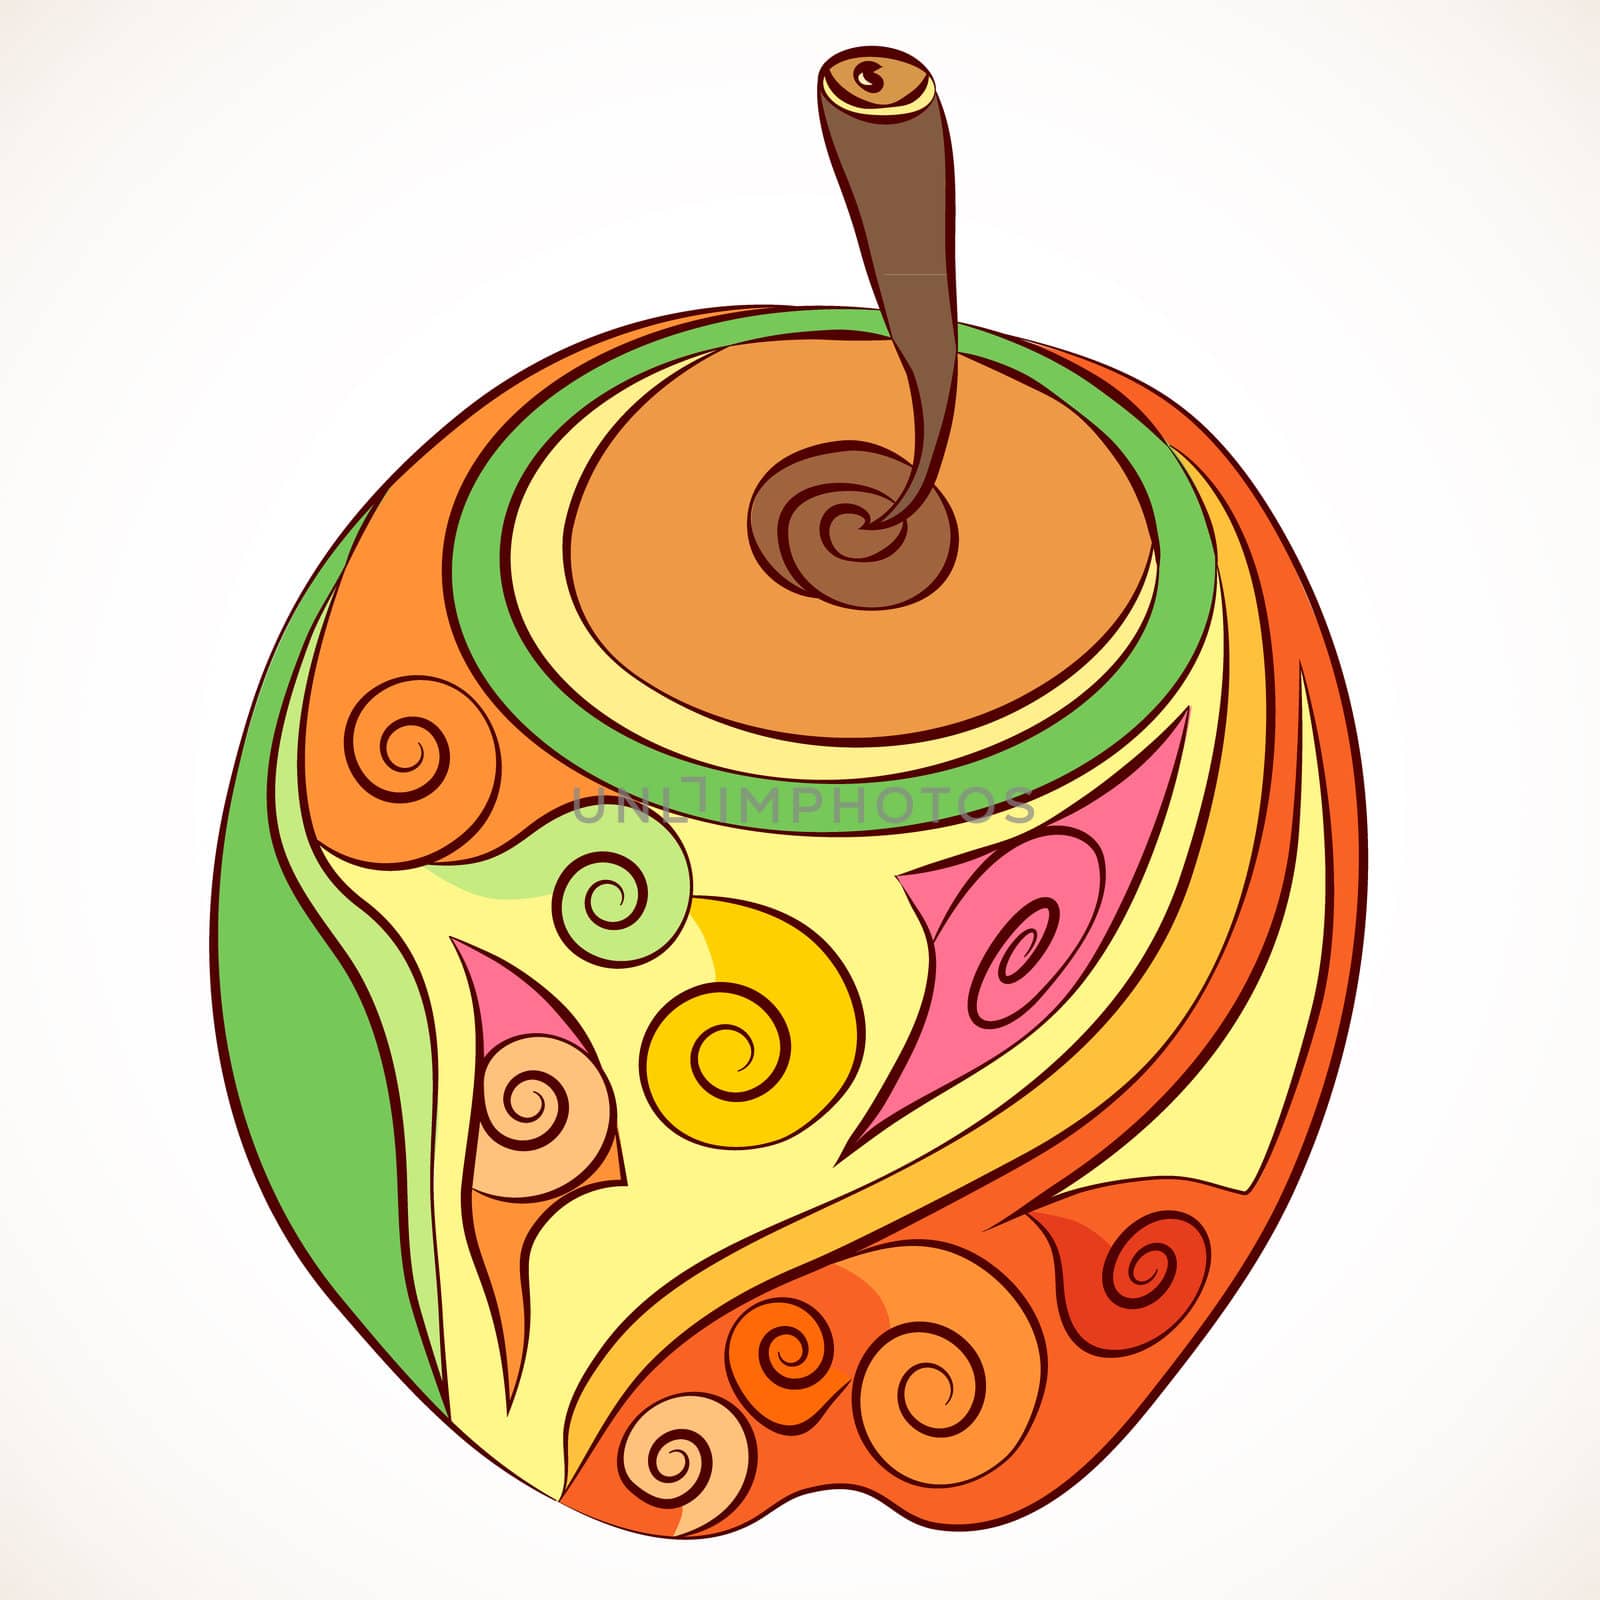 decorative apple by SkyLynx